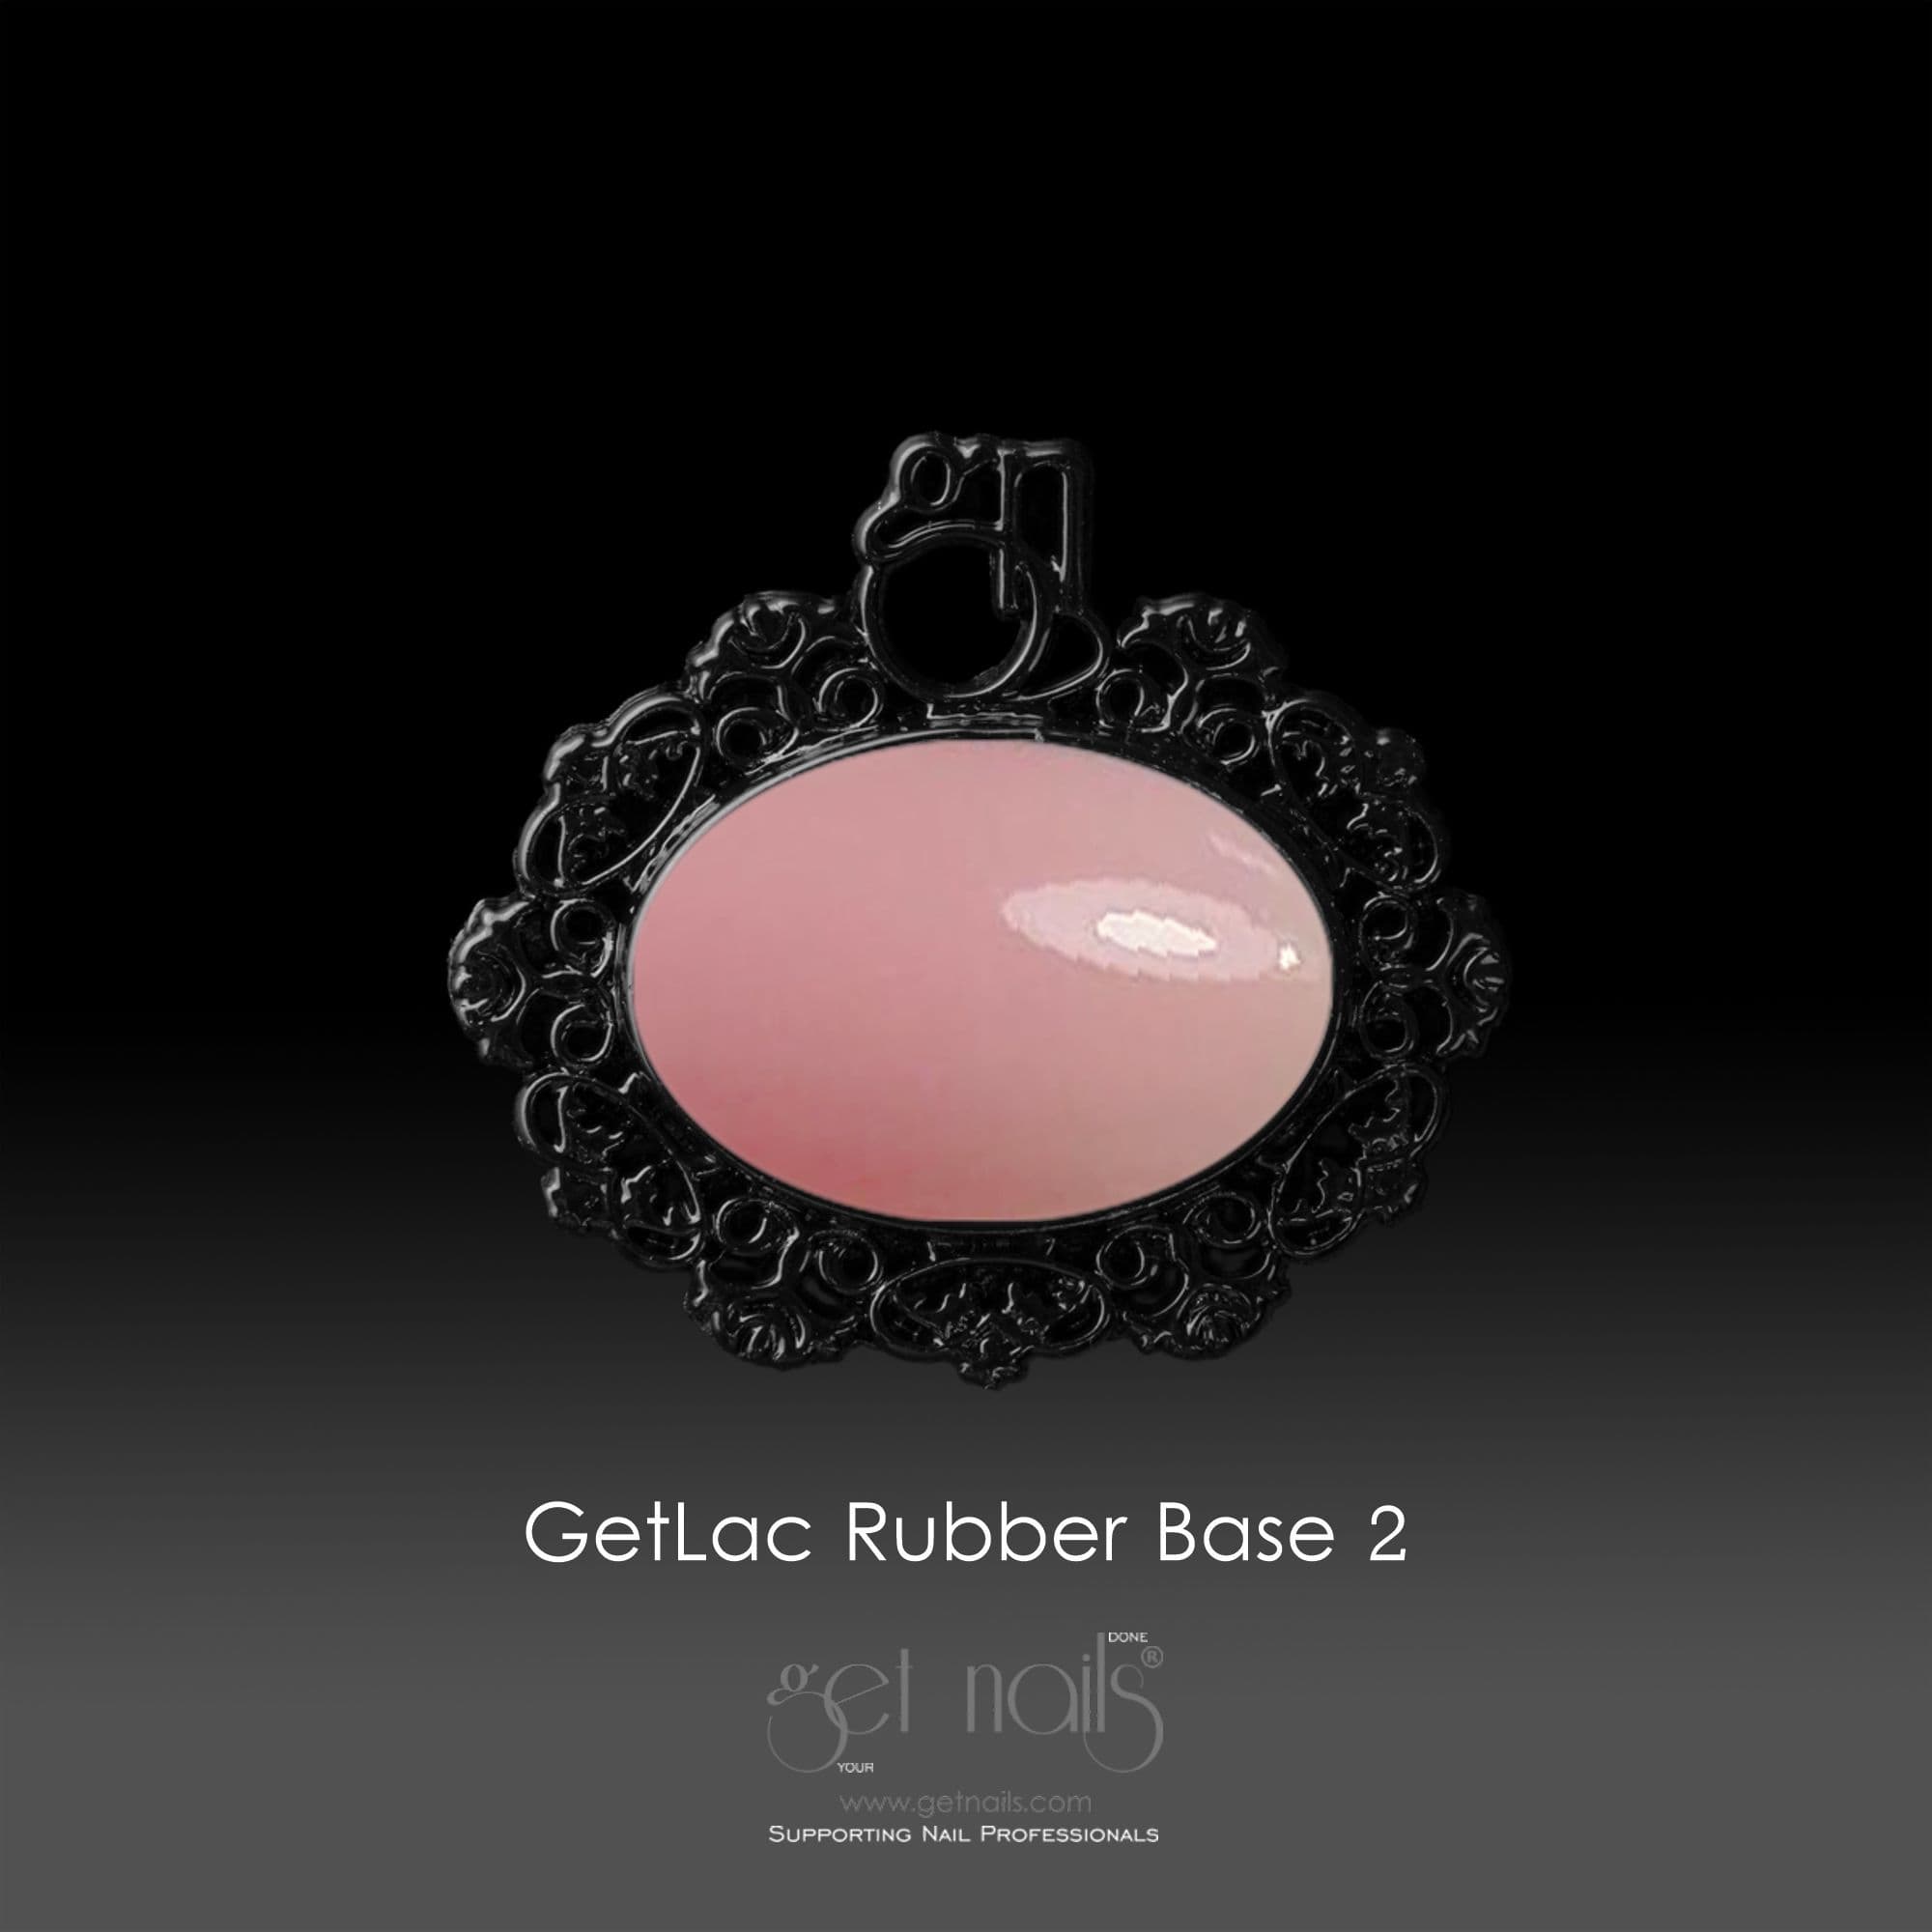 Get Nails Austria - GetLac Rubber Base 2 15g